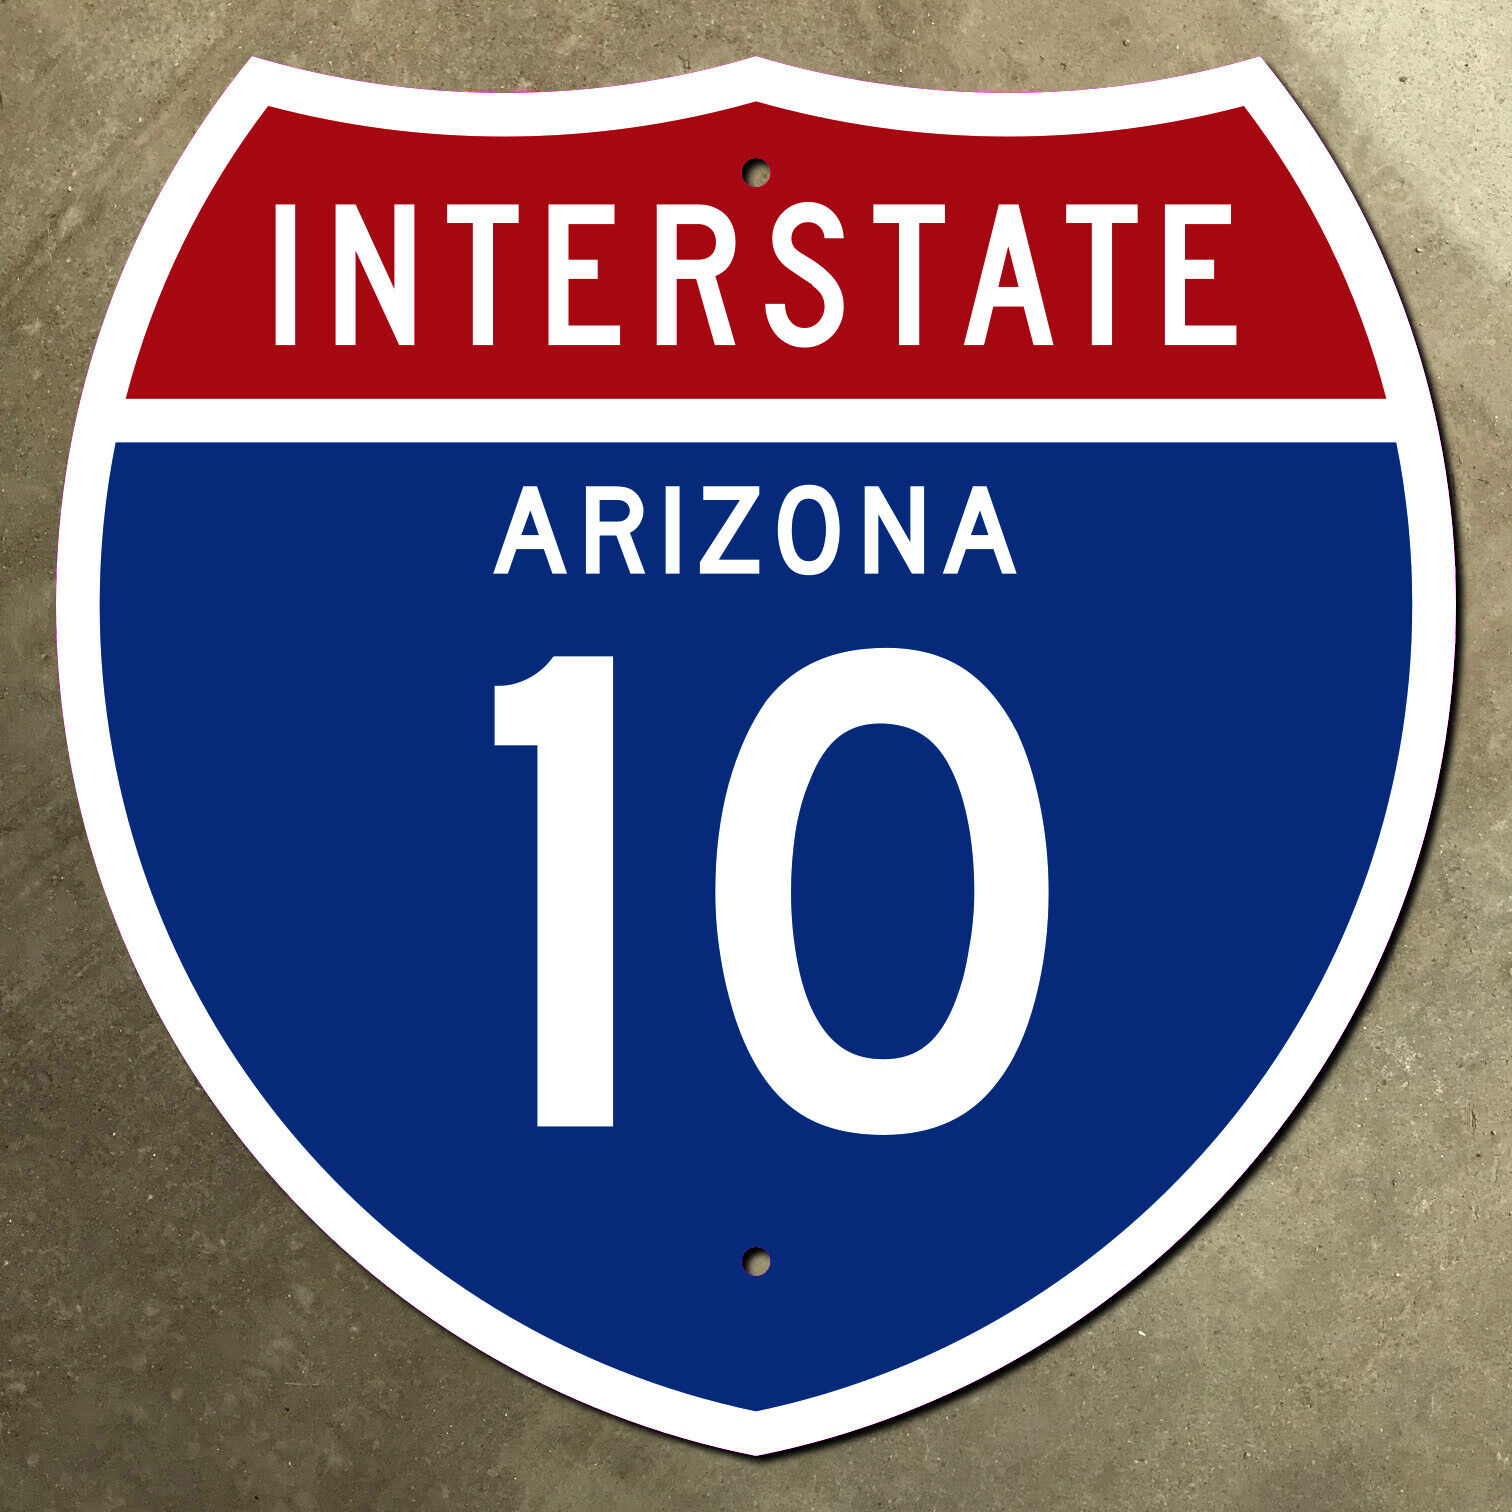 Arizona interstate route 10 Phoenix Tucson highway marker 1957 road sign 12x12